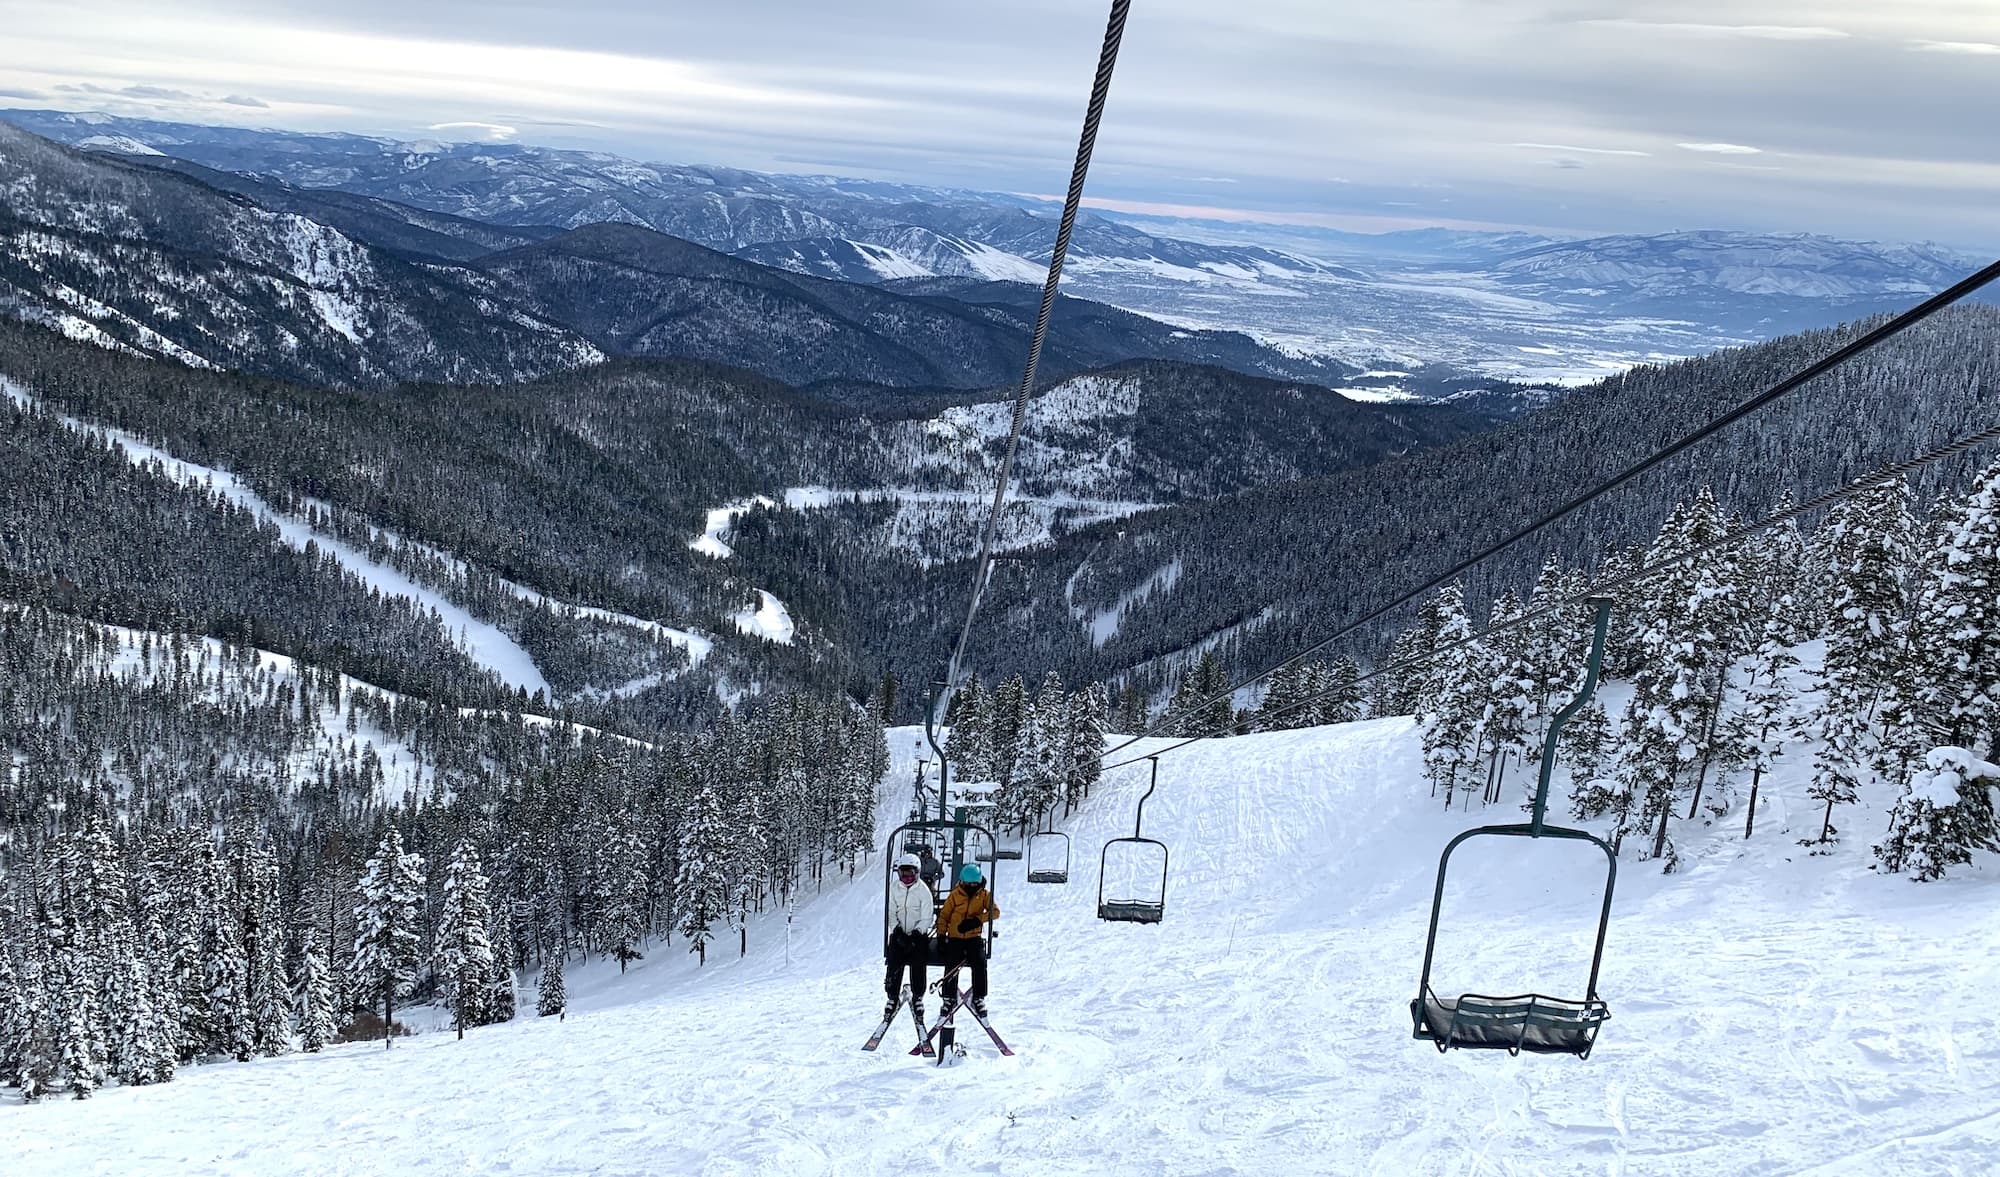 Taking the ski lift at the Snowbowl